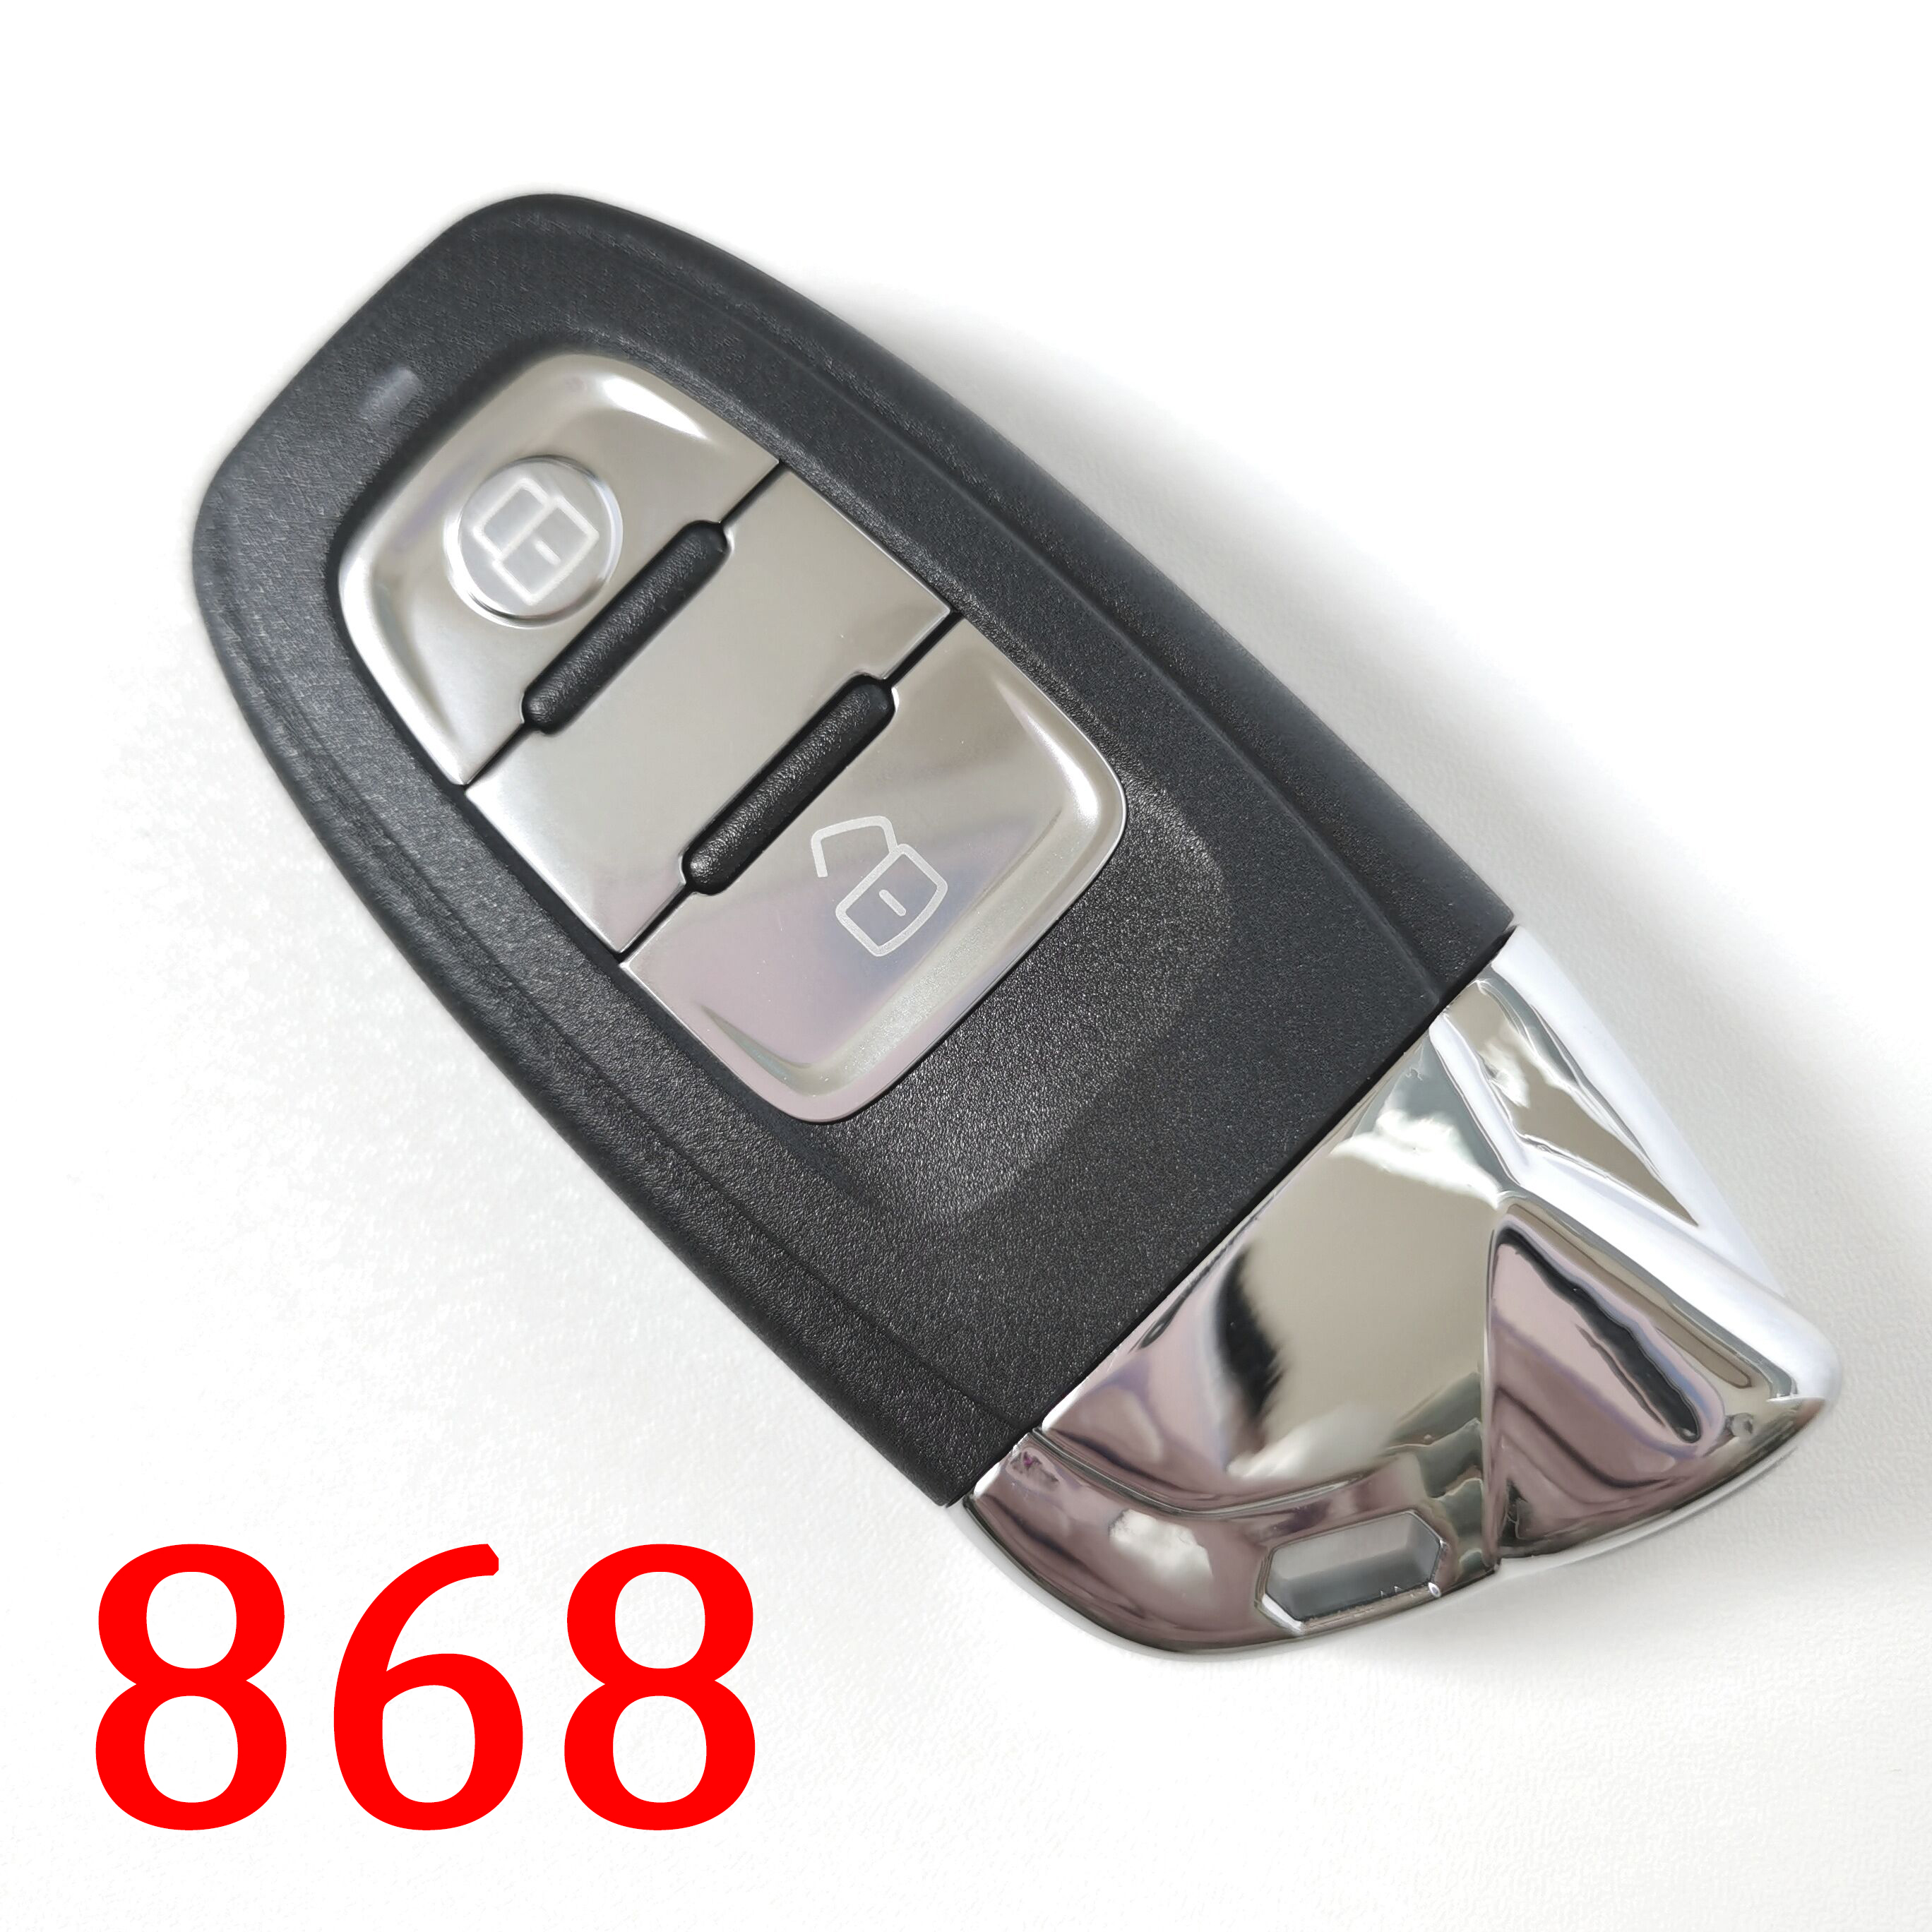 Original 868 MHz Smart Proximity Key for Lamborghini 